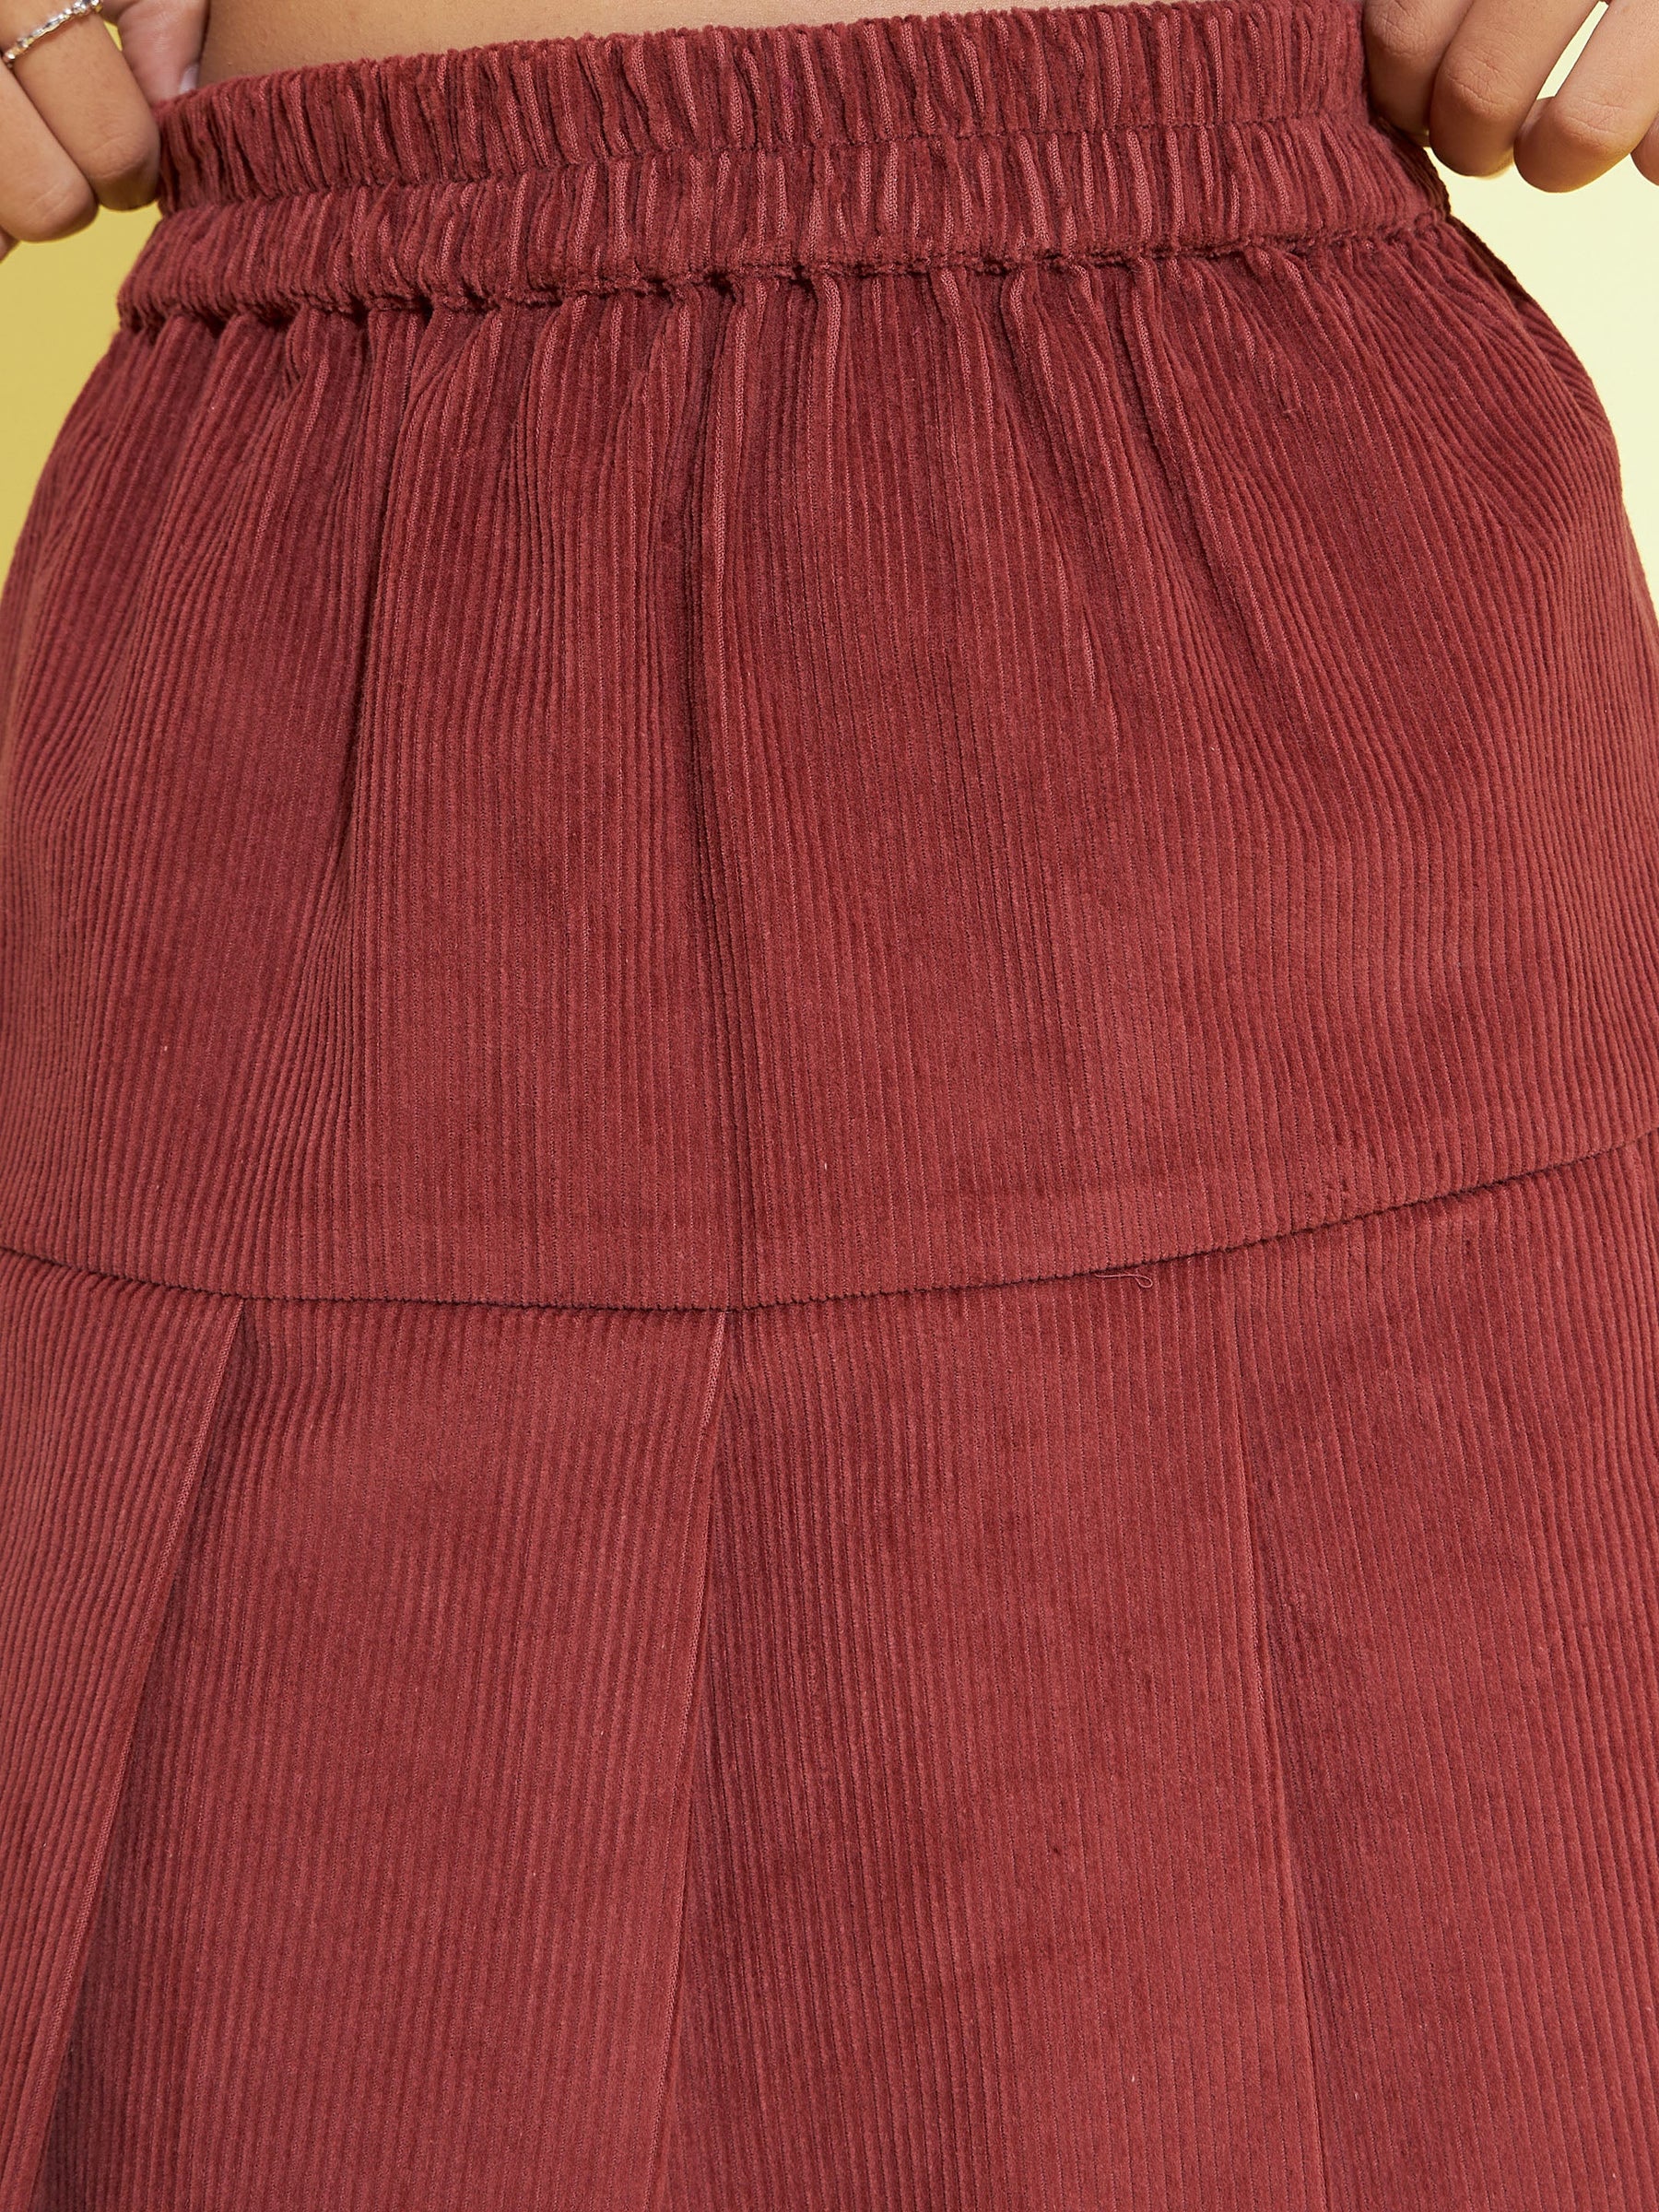 Rust Corduroy Pleated Skirt-Noh.Voh